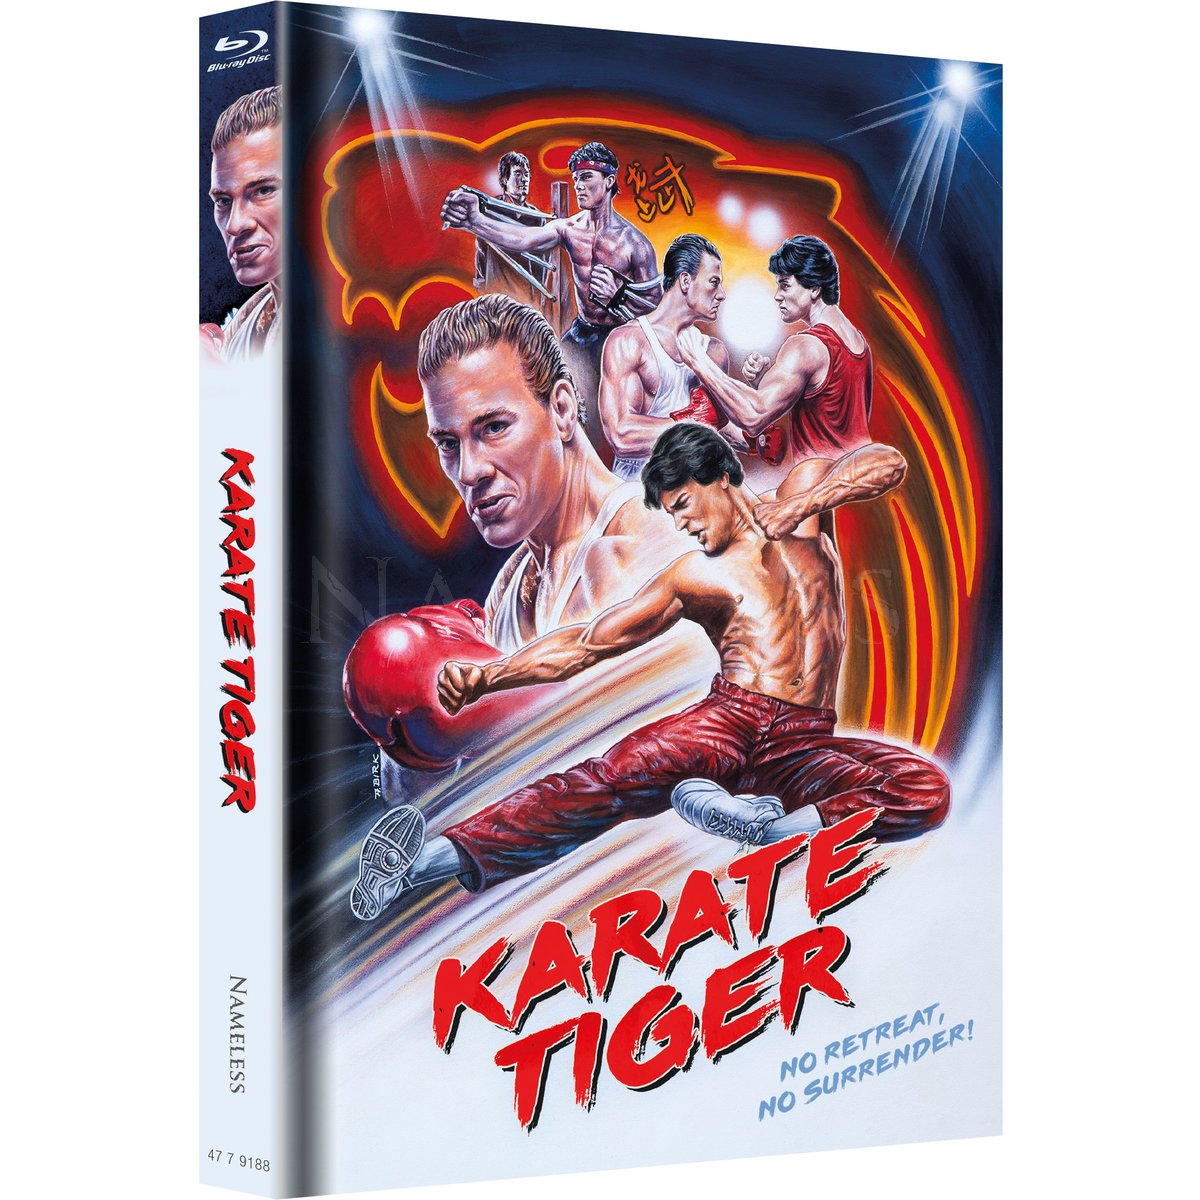 karate-tiger-cover-b-artwork.jpg